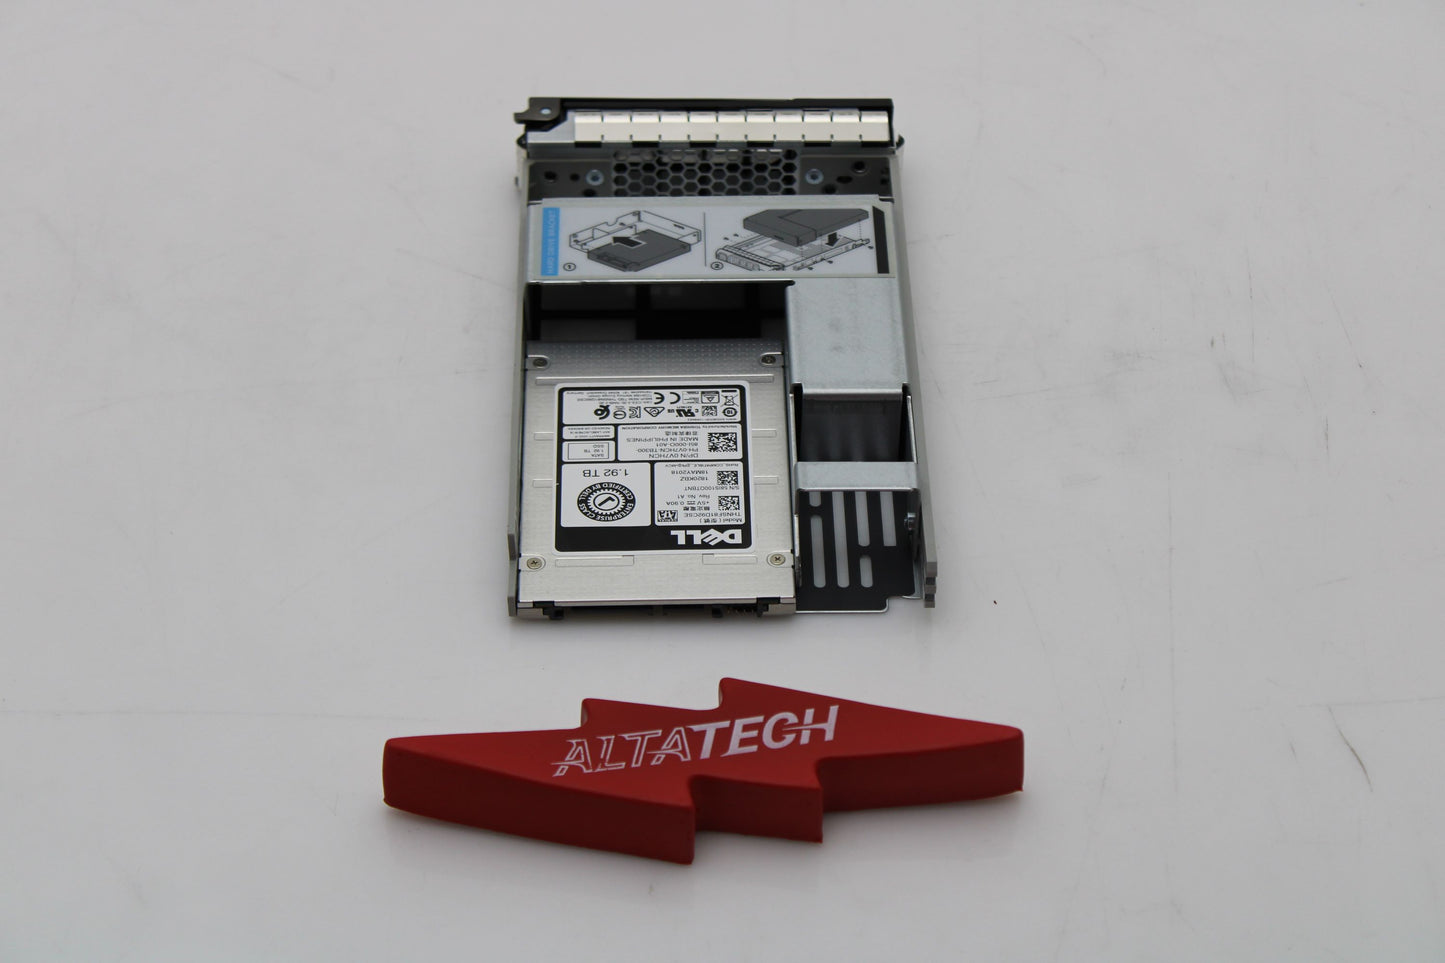 Dell 400-ASZL 1.92TB SSD SATA 3.5 Hybrid 6G RI, Used